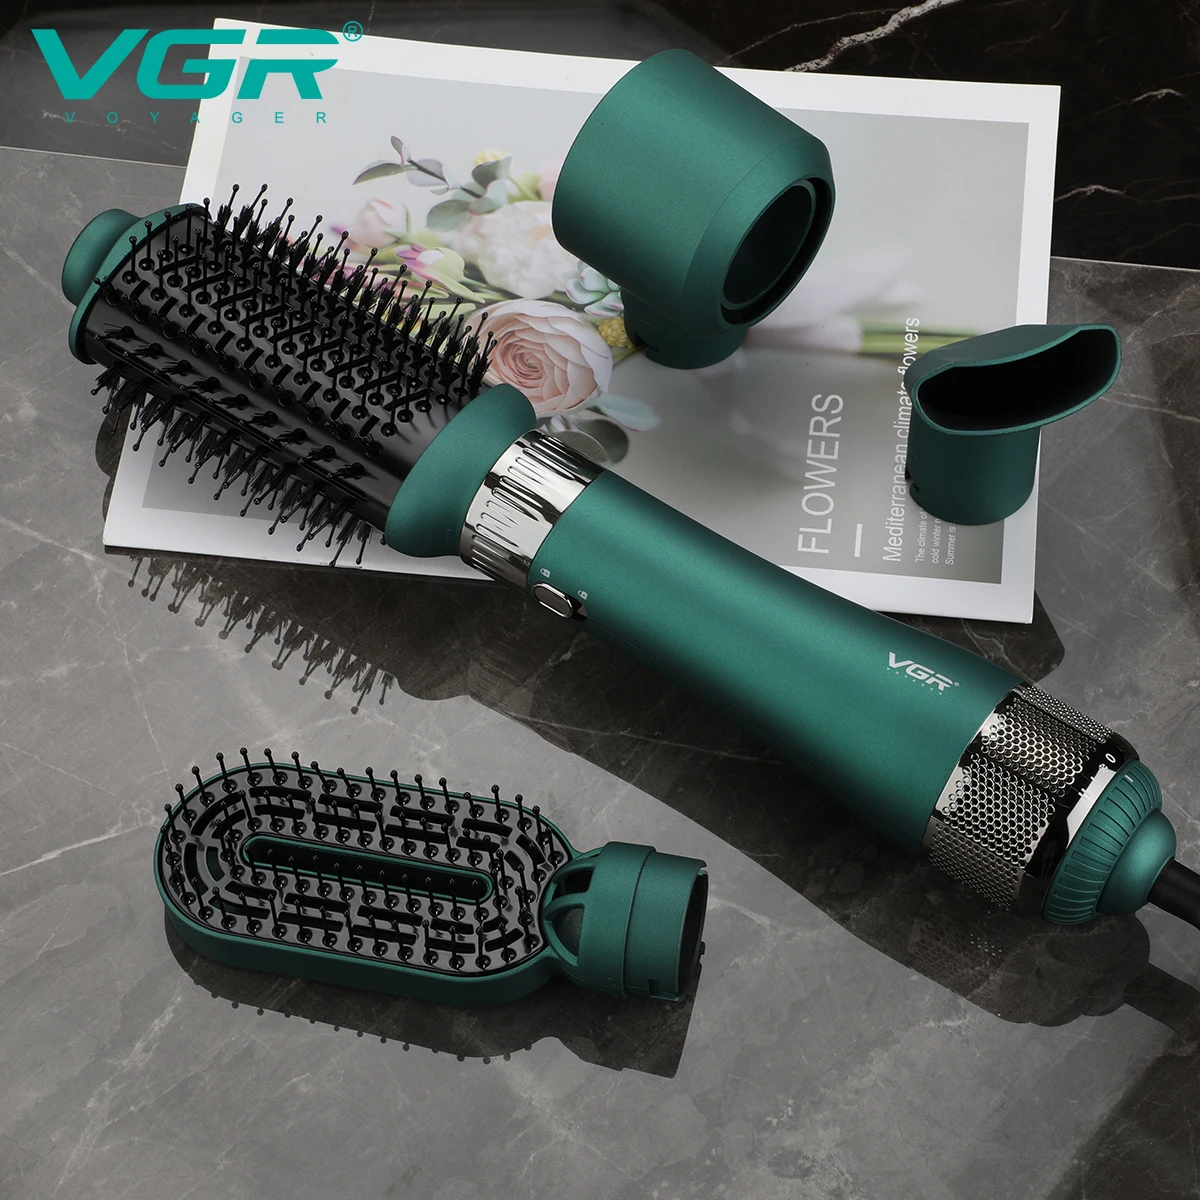 VGR V-493 4 in1 hair dryer styler power cord hot air brush comb  professional electric hair straightener